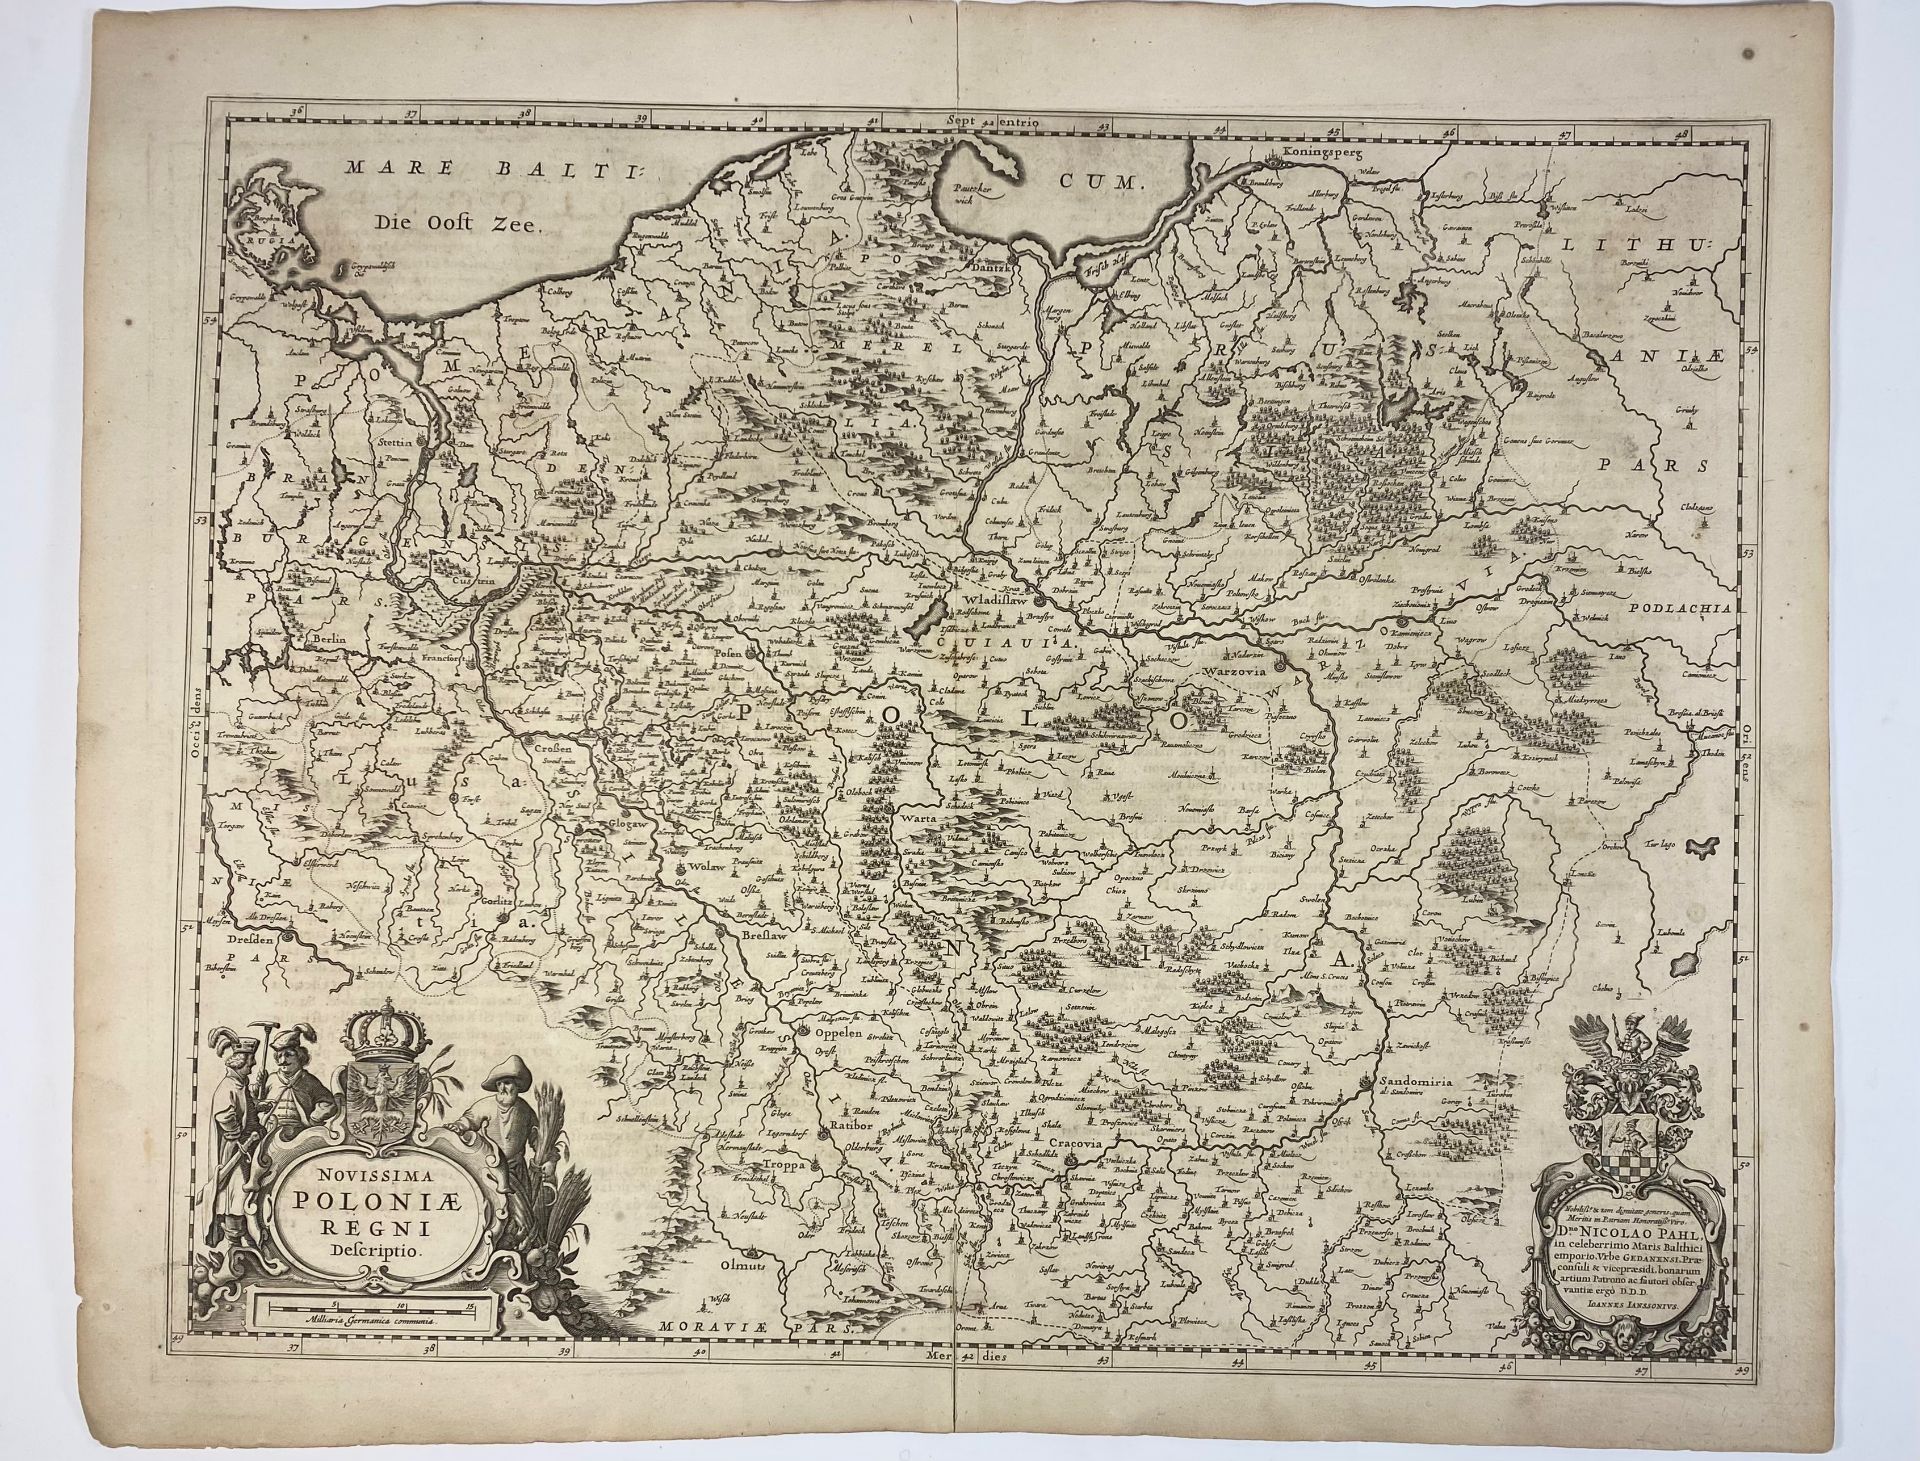 EASTERN EUROPE -- POLAND -- "NOVISSIMA POLONIÆ Regni descriptio". (Amst.), J. Janssonius, (c. 1675